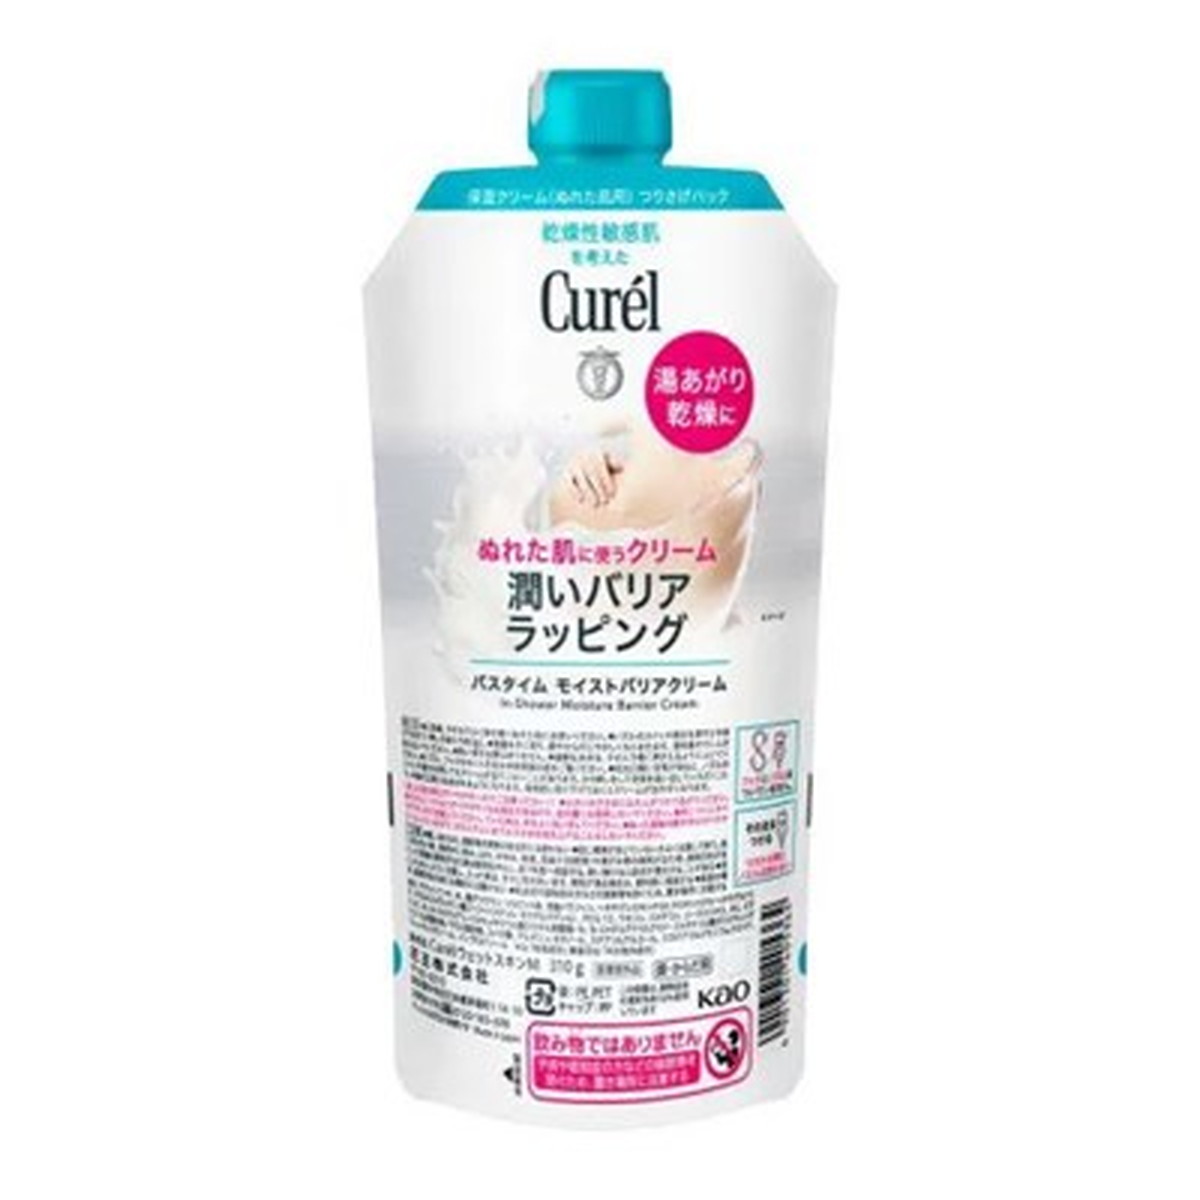  Kao kyureruba baby's bib m moist burr a cream 310g.... moisturizer cream wet .. for quasi drug 